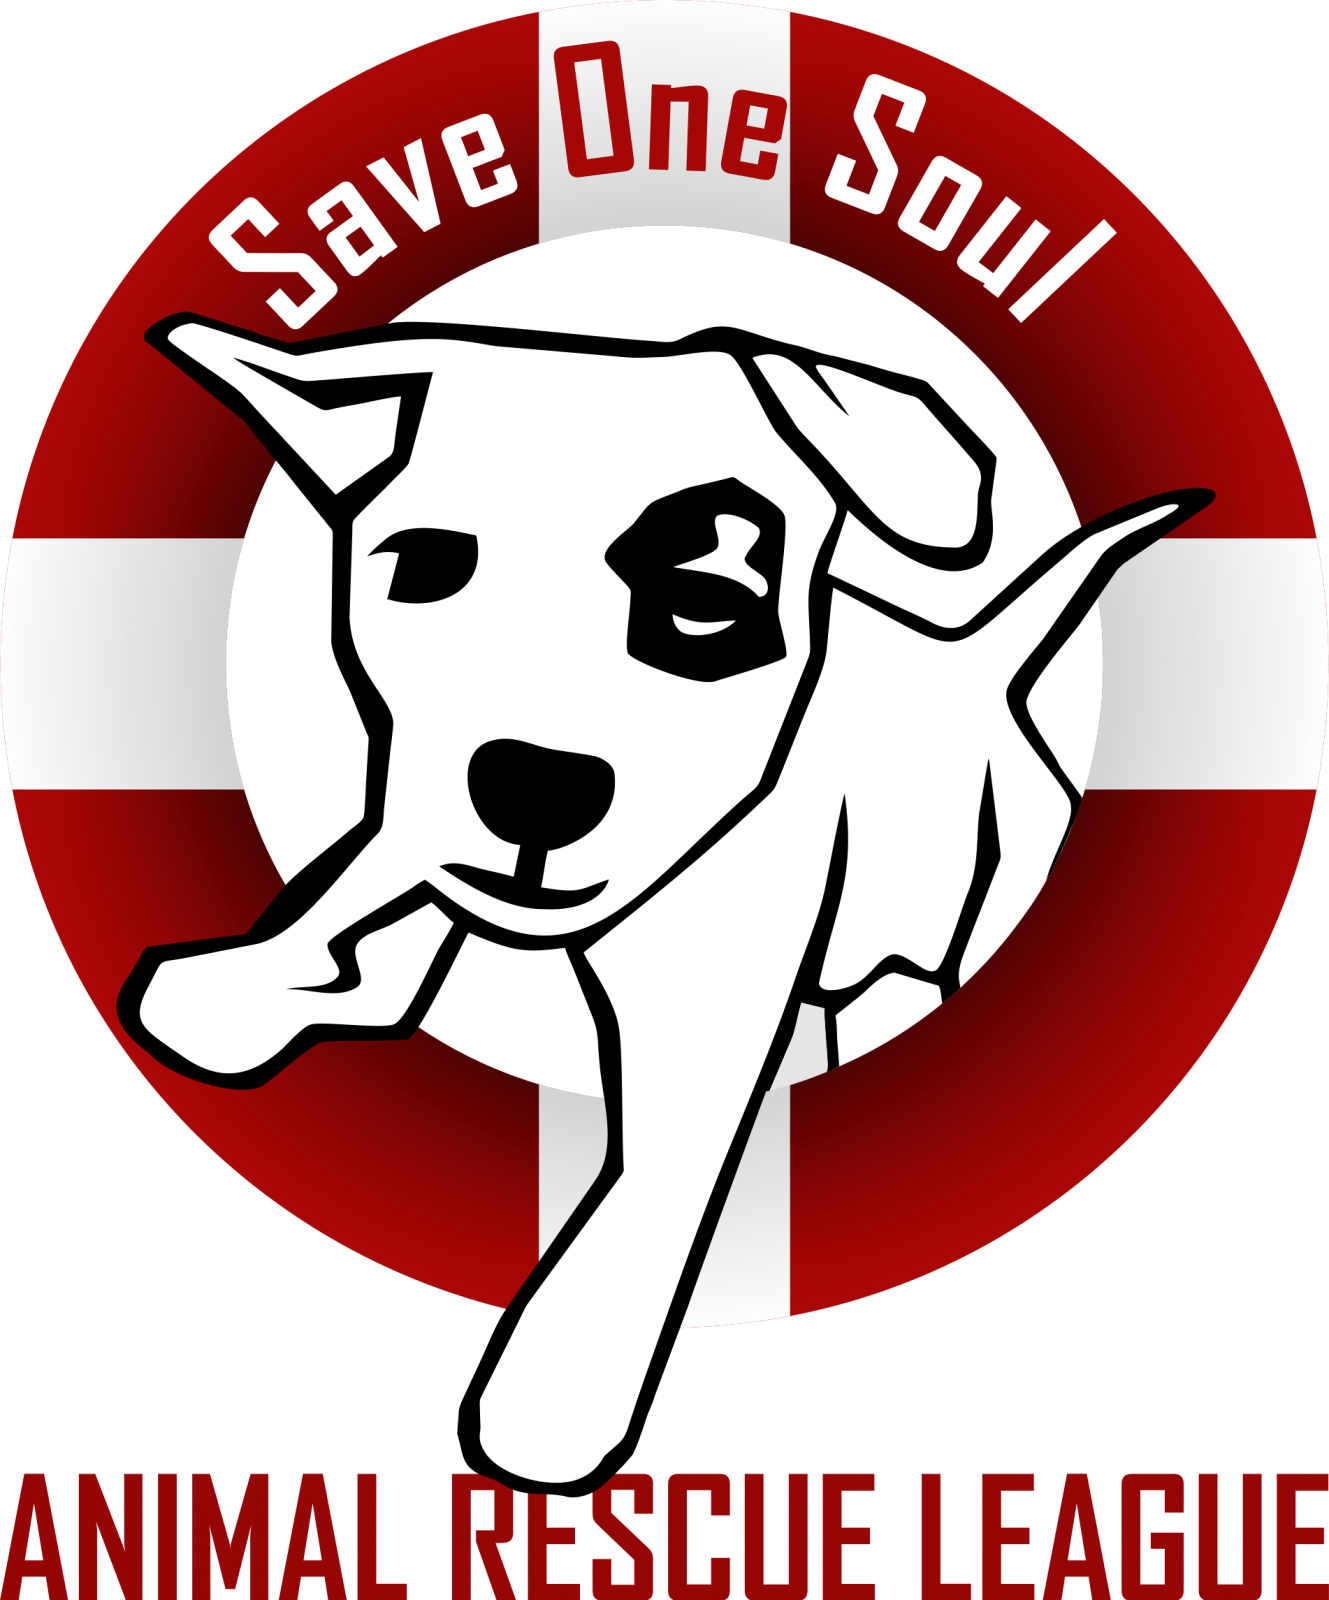 SOS Animal Rescue League in Rhode Island